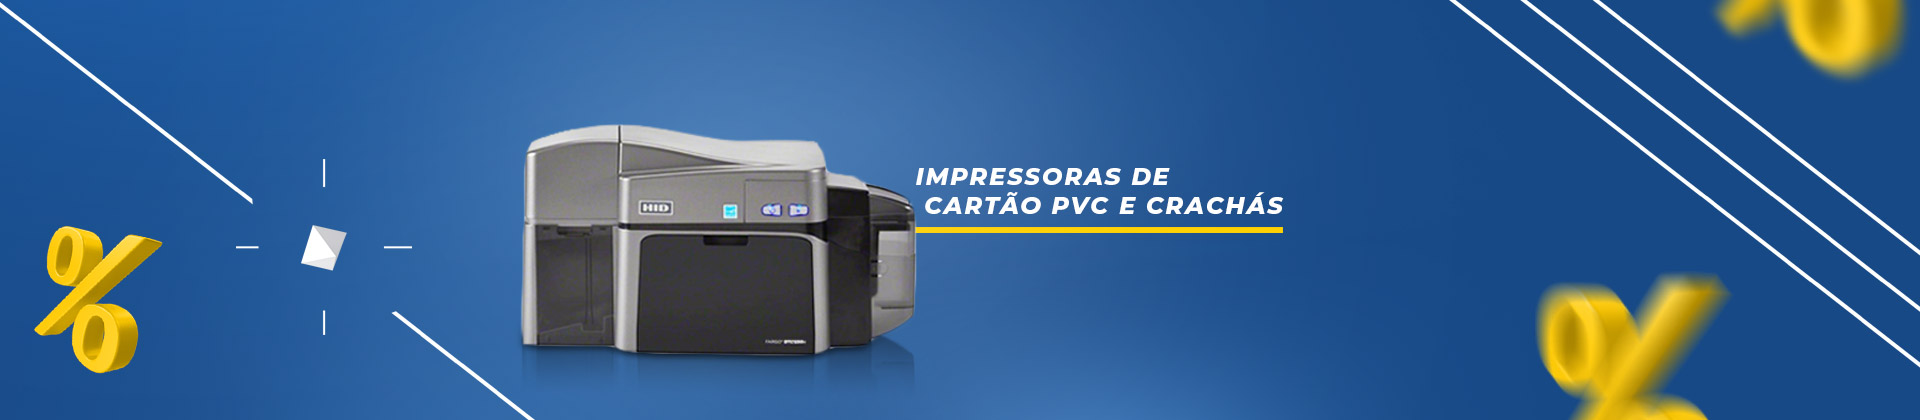 banner-03-Impressoras-de-Cartao-Pvc-e-Crachas